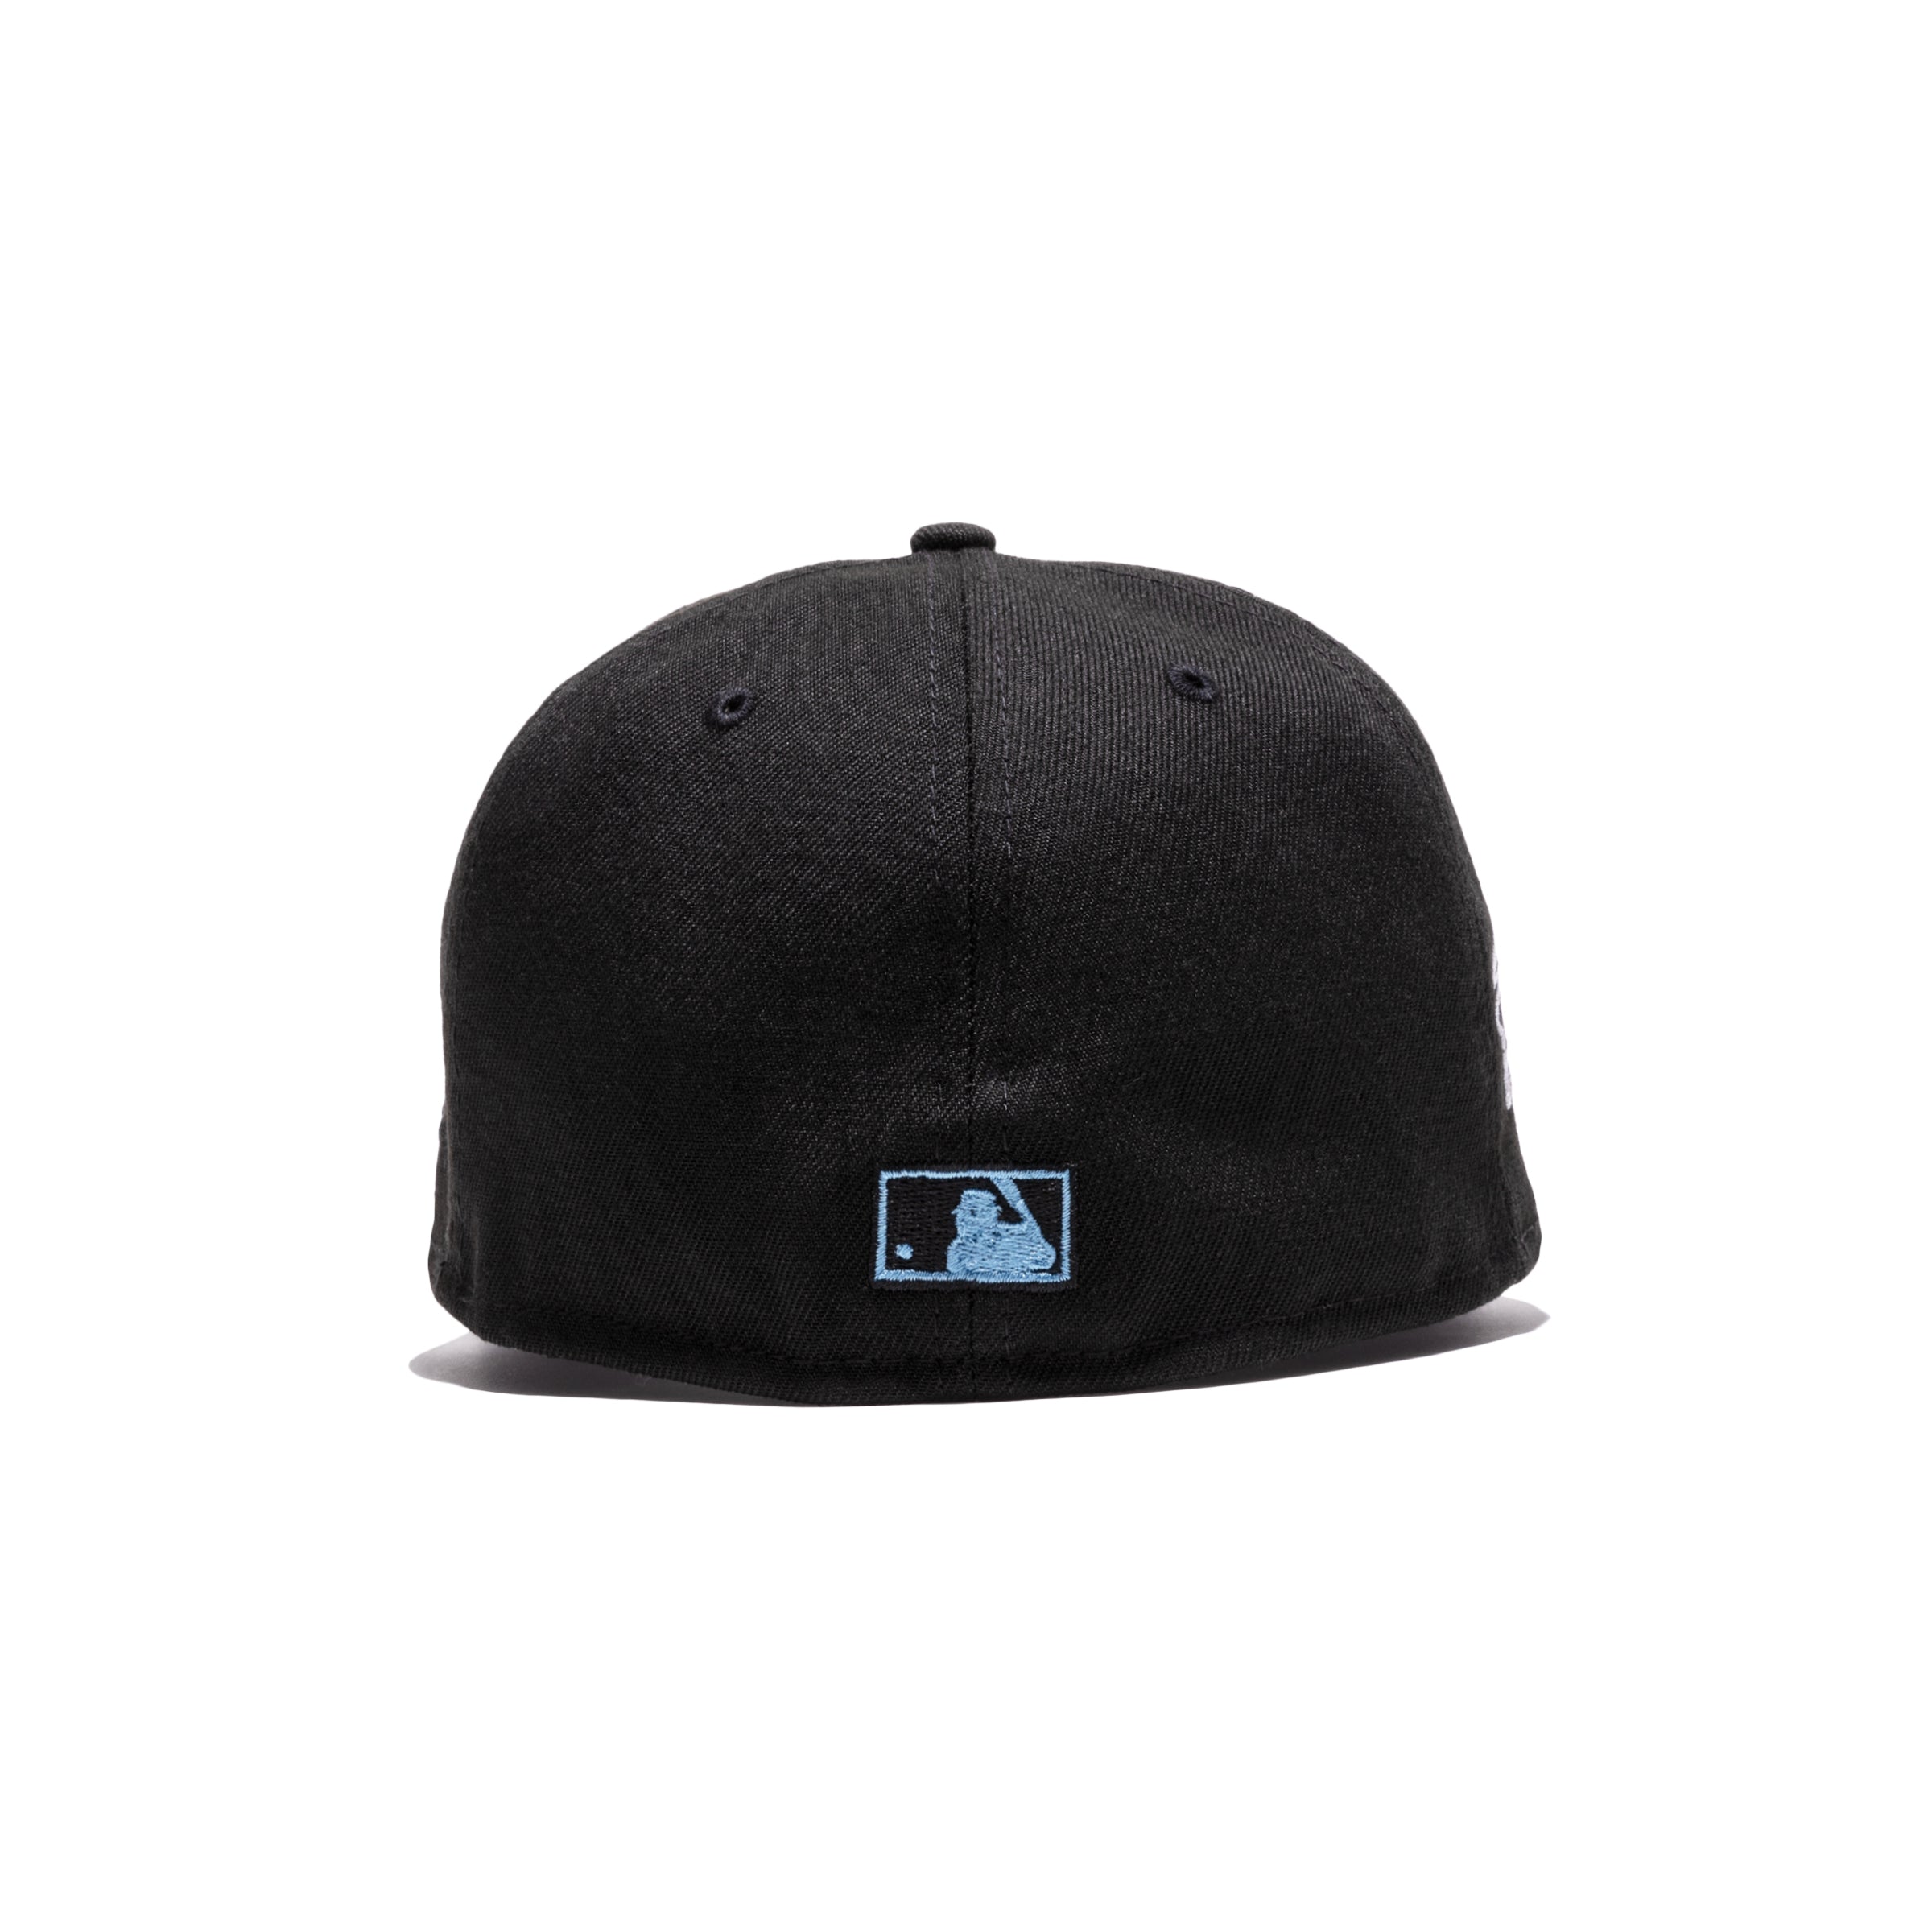 New York Yankees Black (Blue Brim) 1999 World Series Fitted Hat